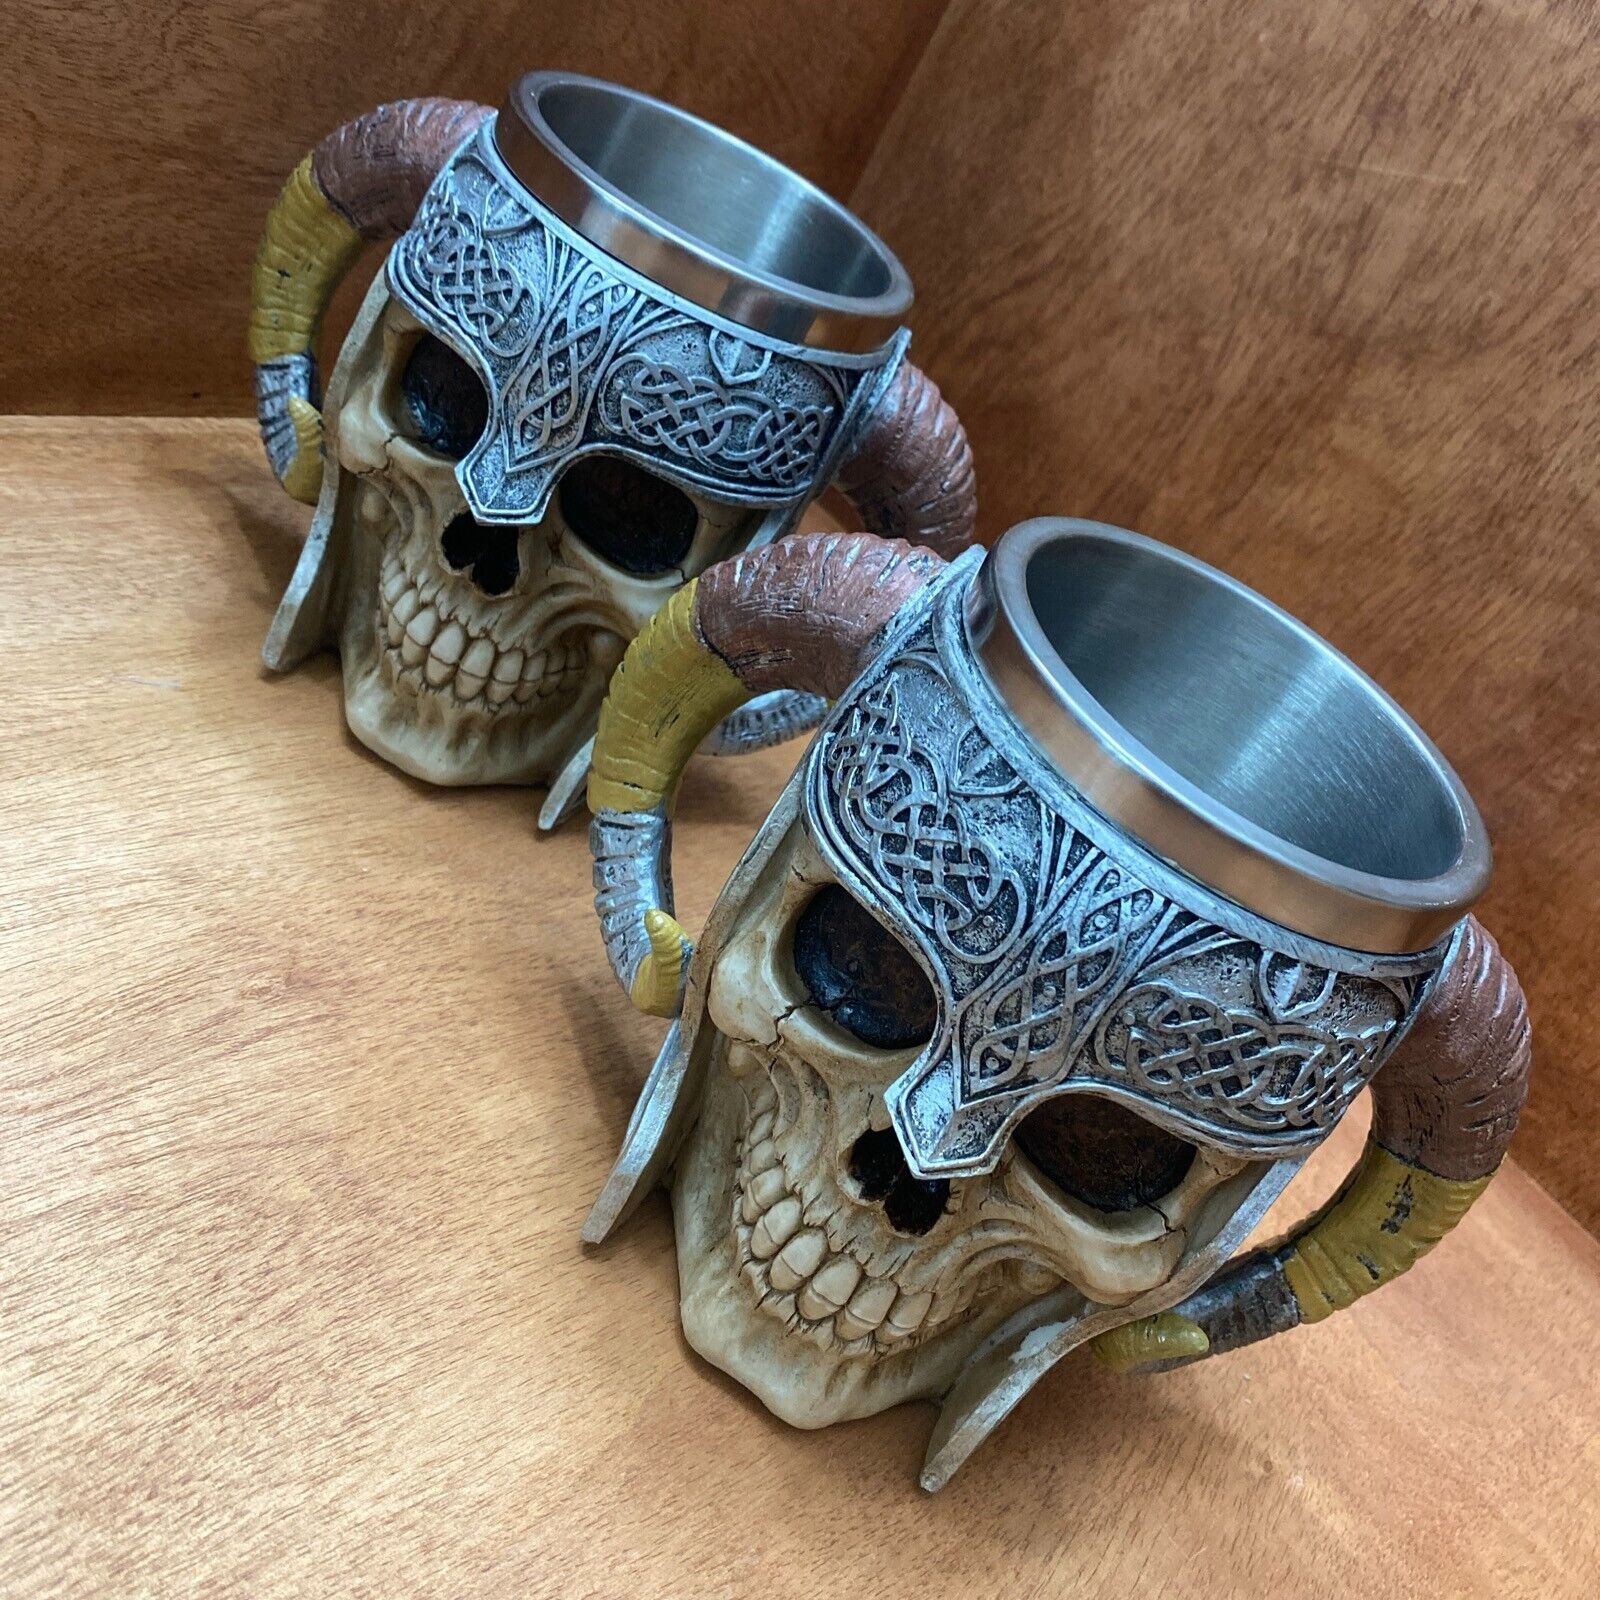 3D Skull Mugs Stainless Steel Viking Cup Ram Horns Skeleton Head Stein Tankard